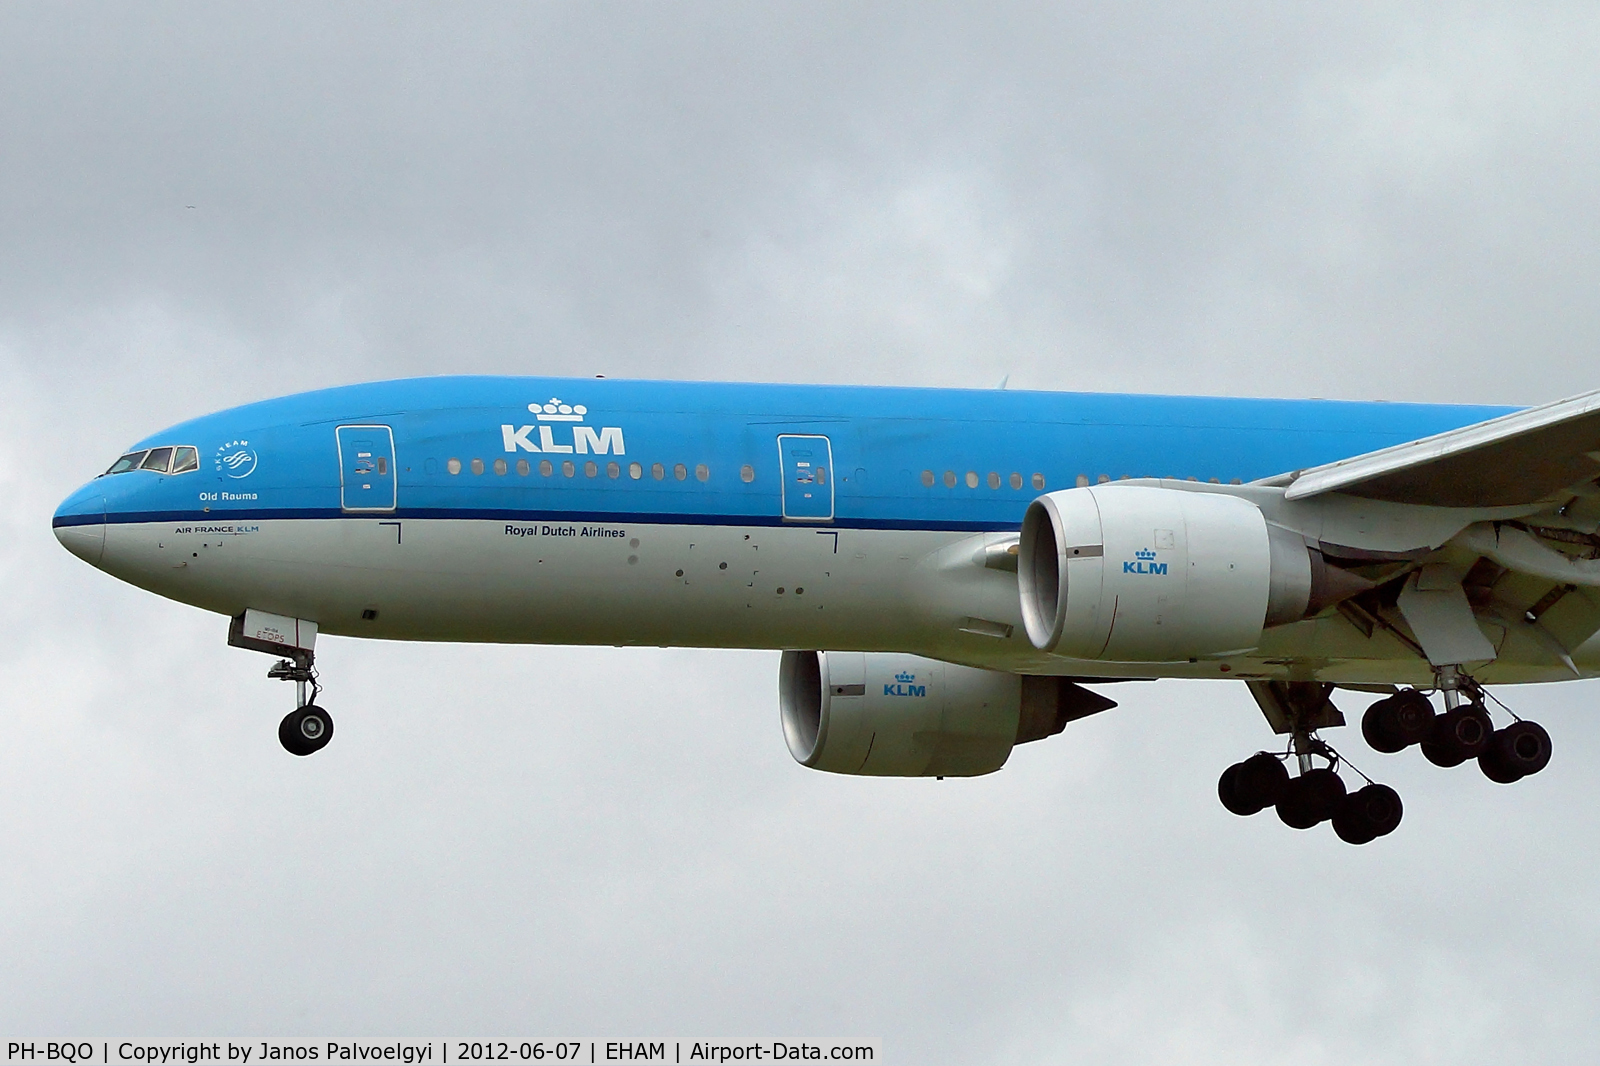 PH-BQO, 2007 Boeing 777-206/ER C/N 35295, KLM Royal Dutch Airlines Boeing B777-206/ER final approach in EHAM/AMS